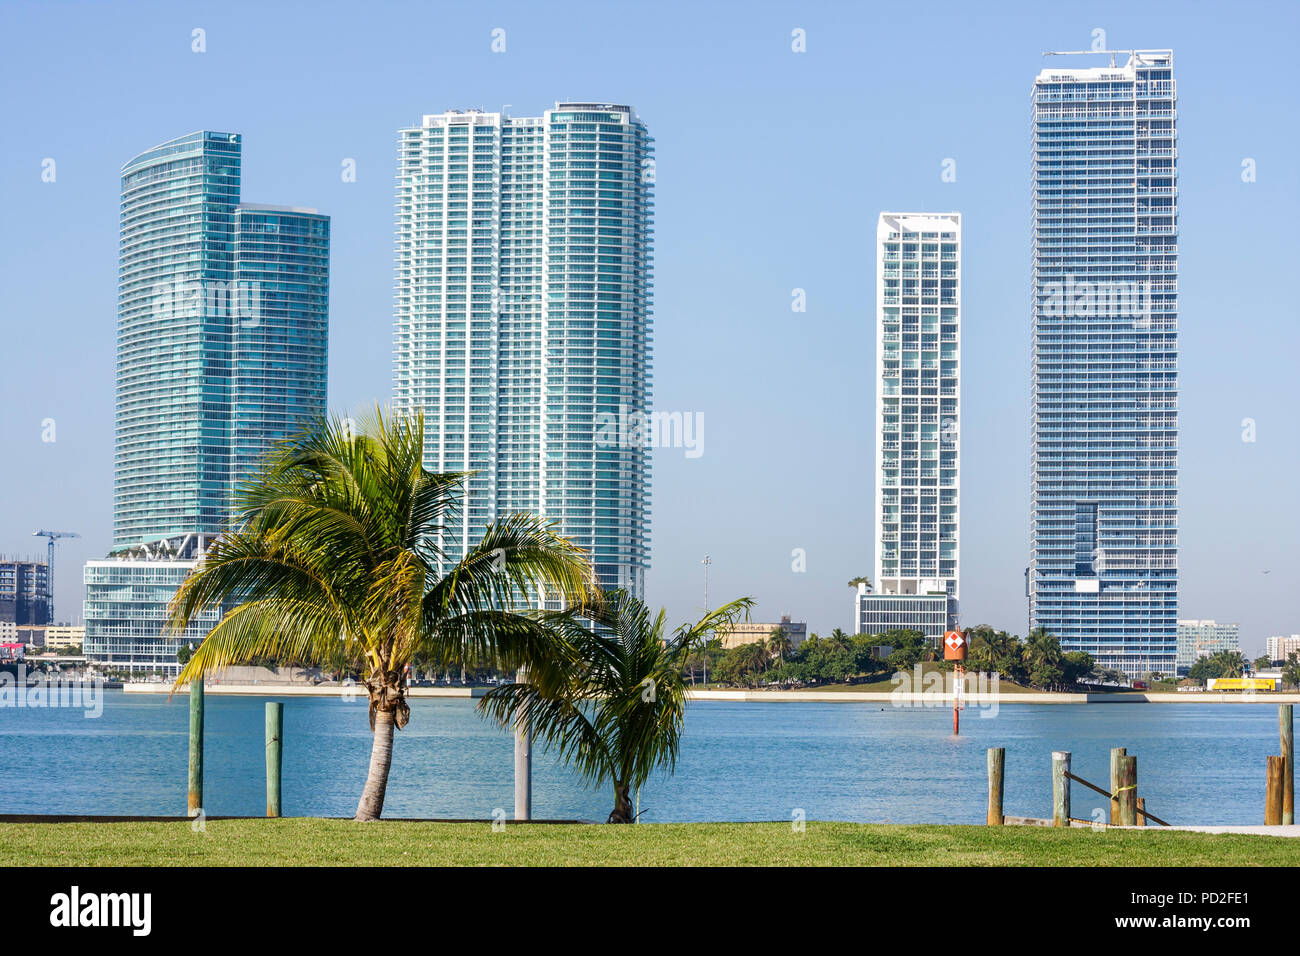 Miami Florida,Biscayne Bay,Watson Island view,Biscayne Boulevard,high rise skyscraper skyscrapers building buildings condominium residential apartment Stock Photo